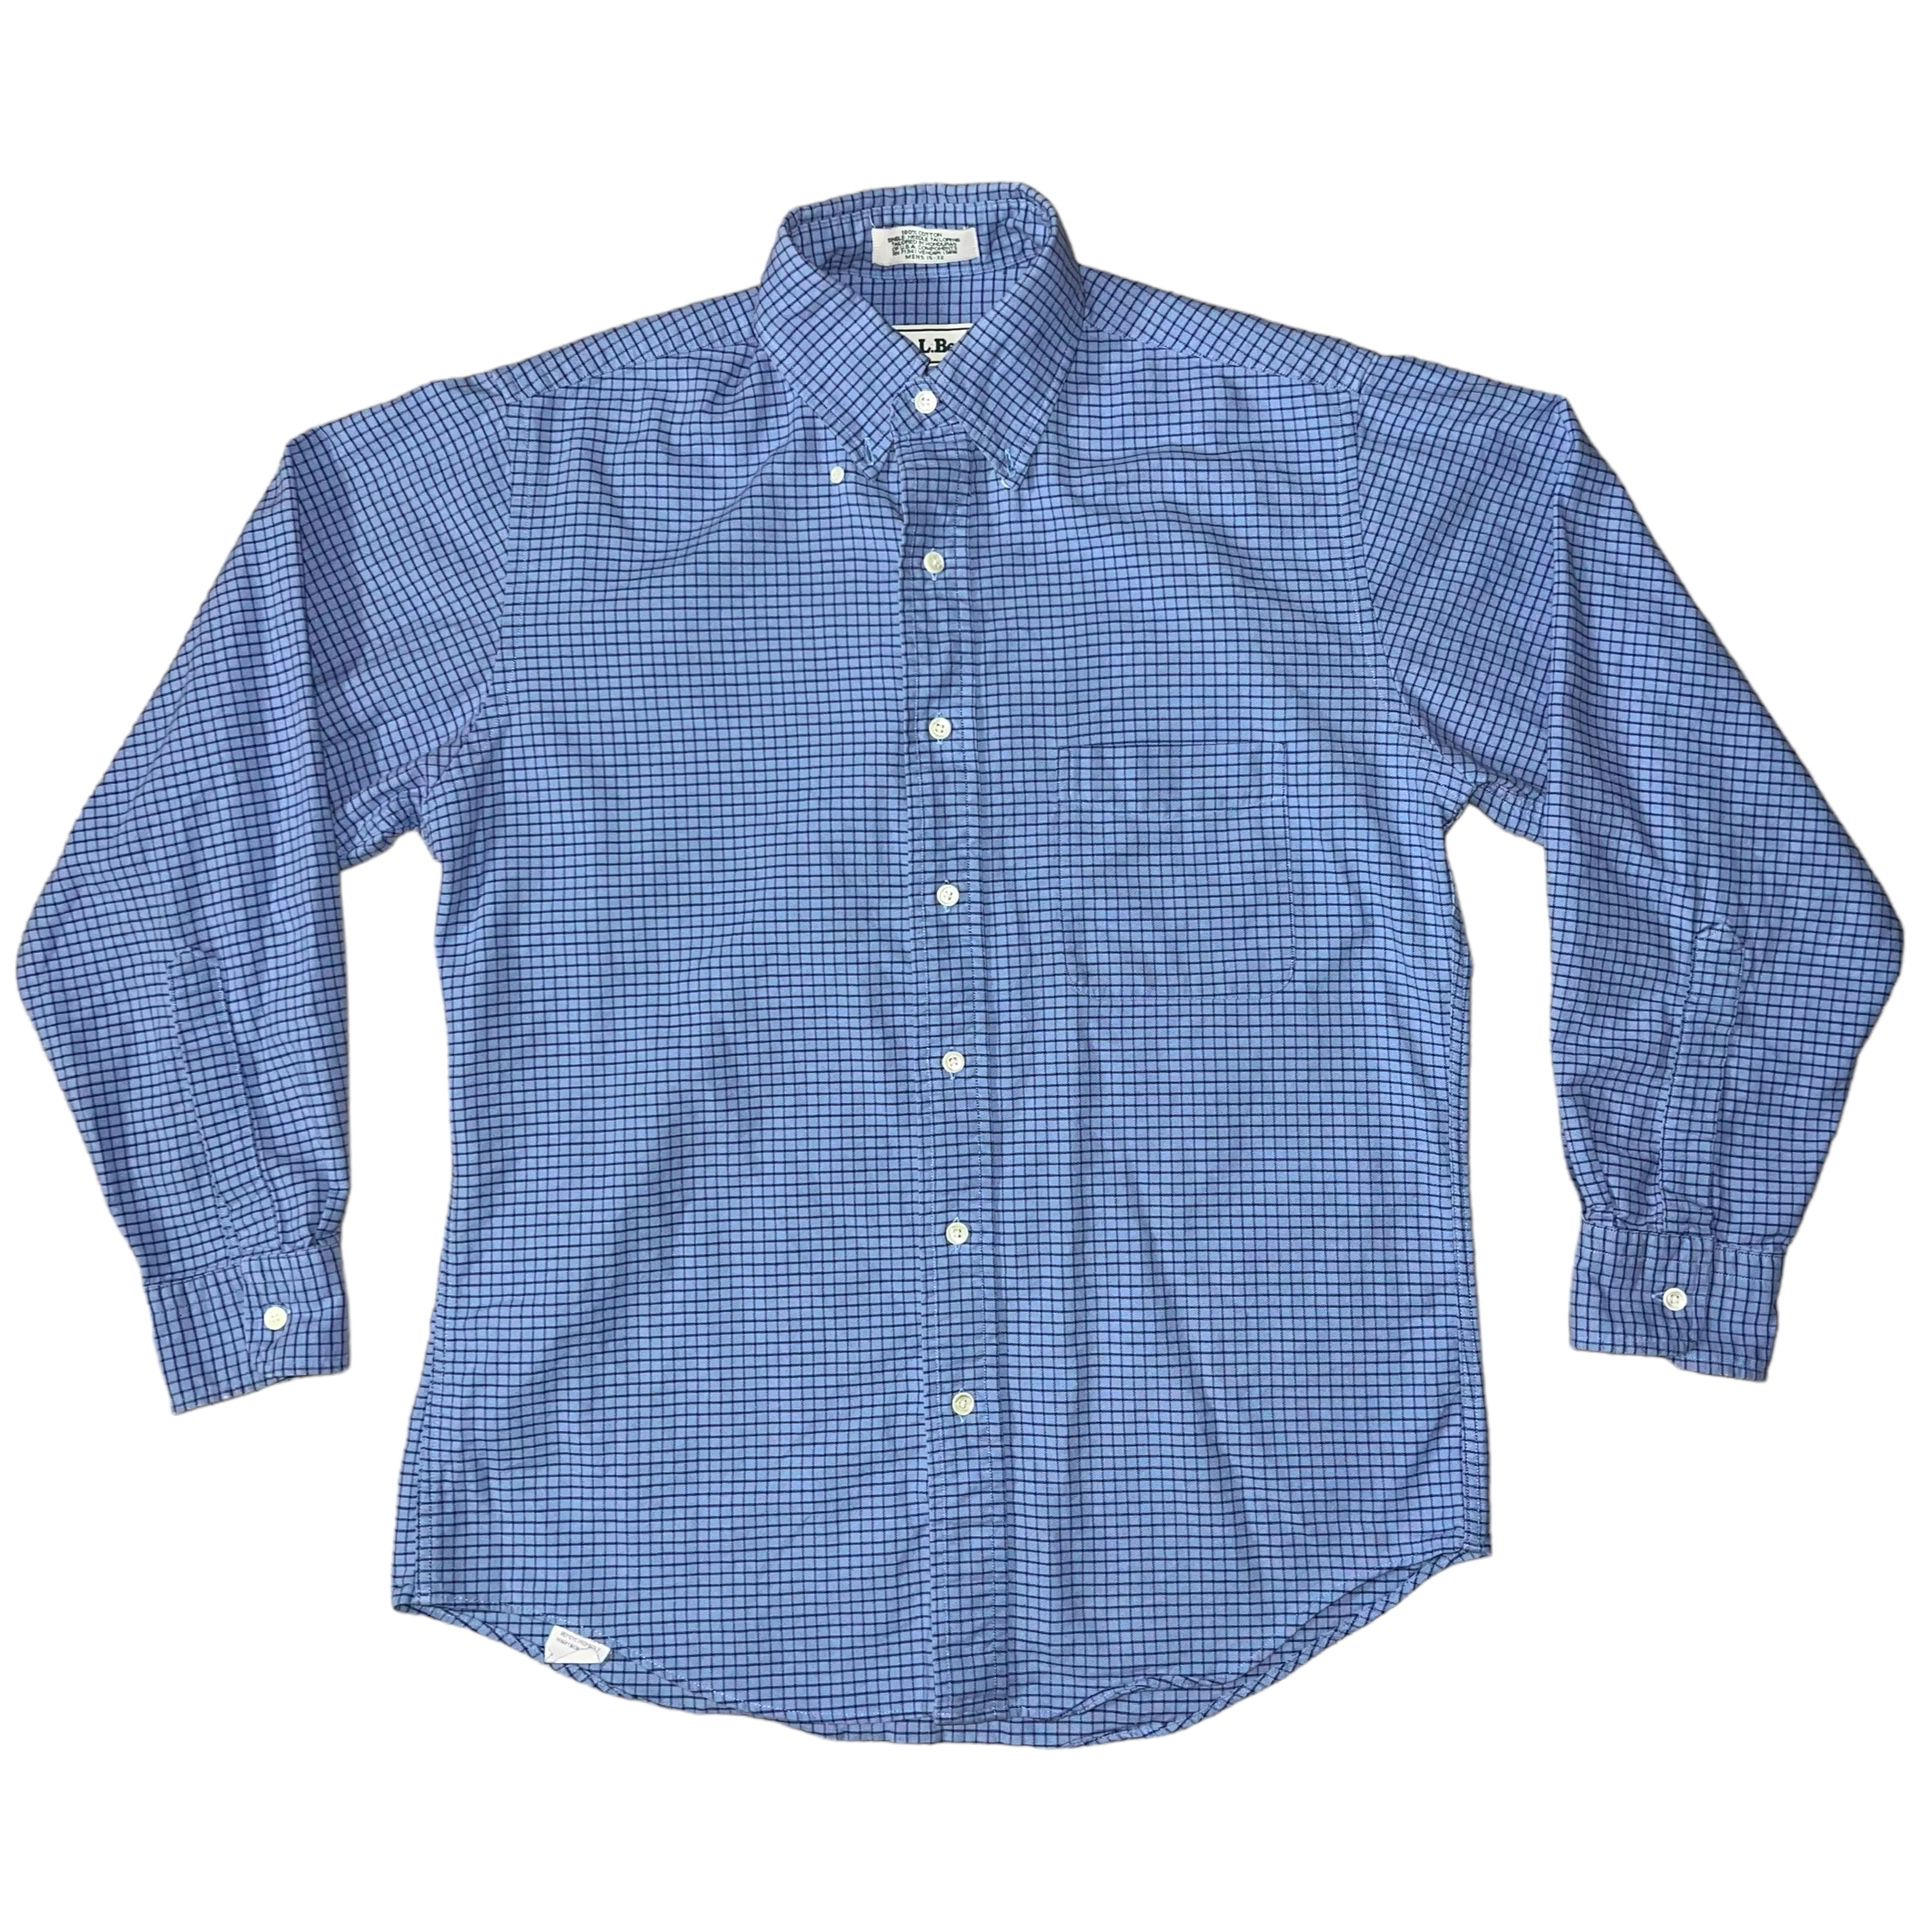 L.L. Bean Men's Dress Shirt 15-32 Blue Checkered Plaid Long Sleeve Button-Up